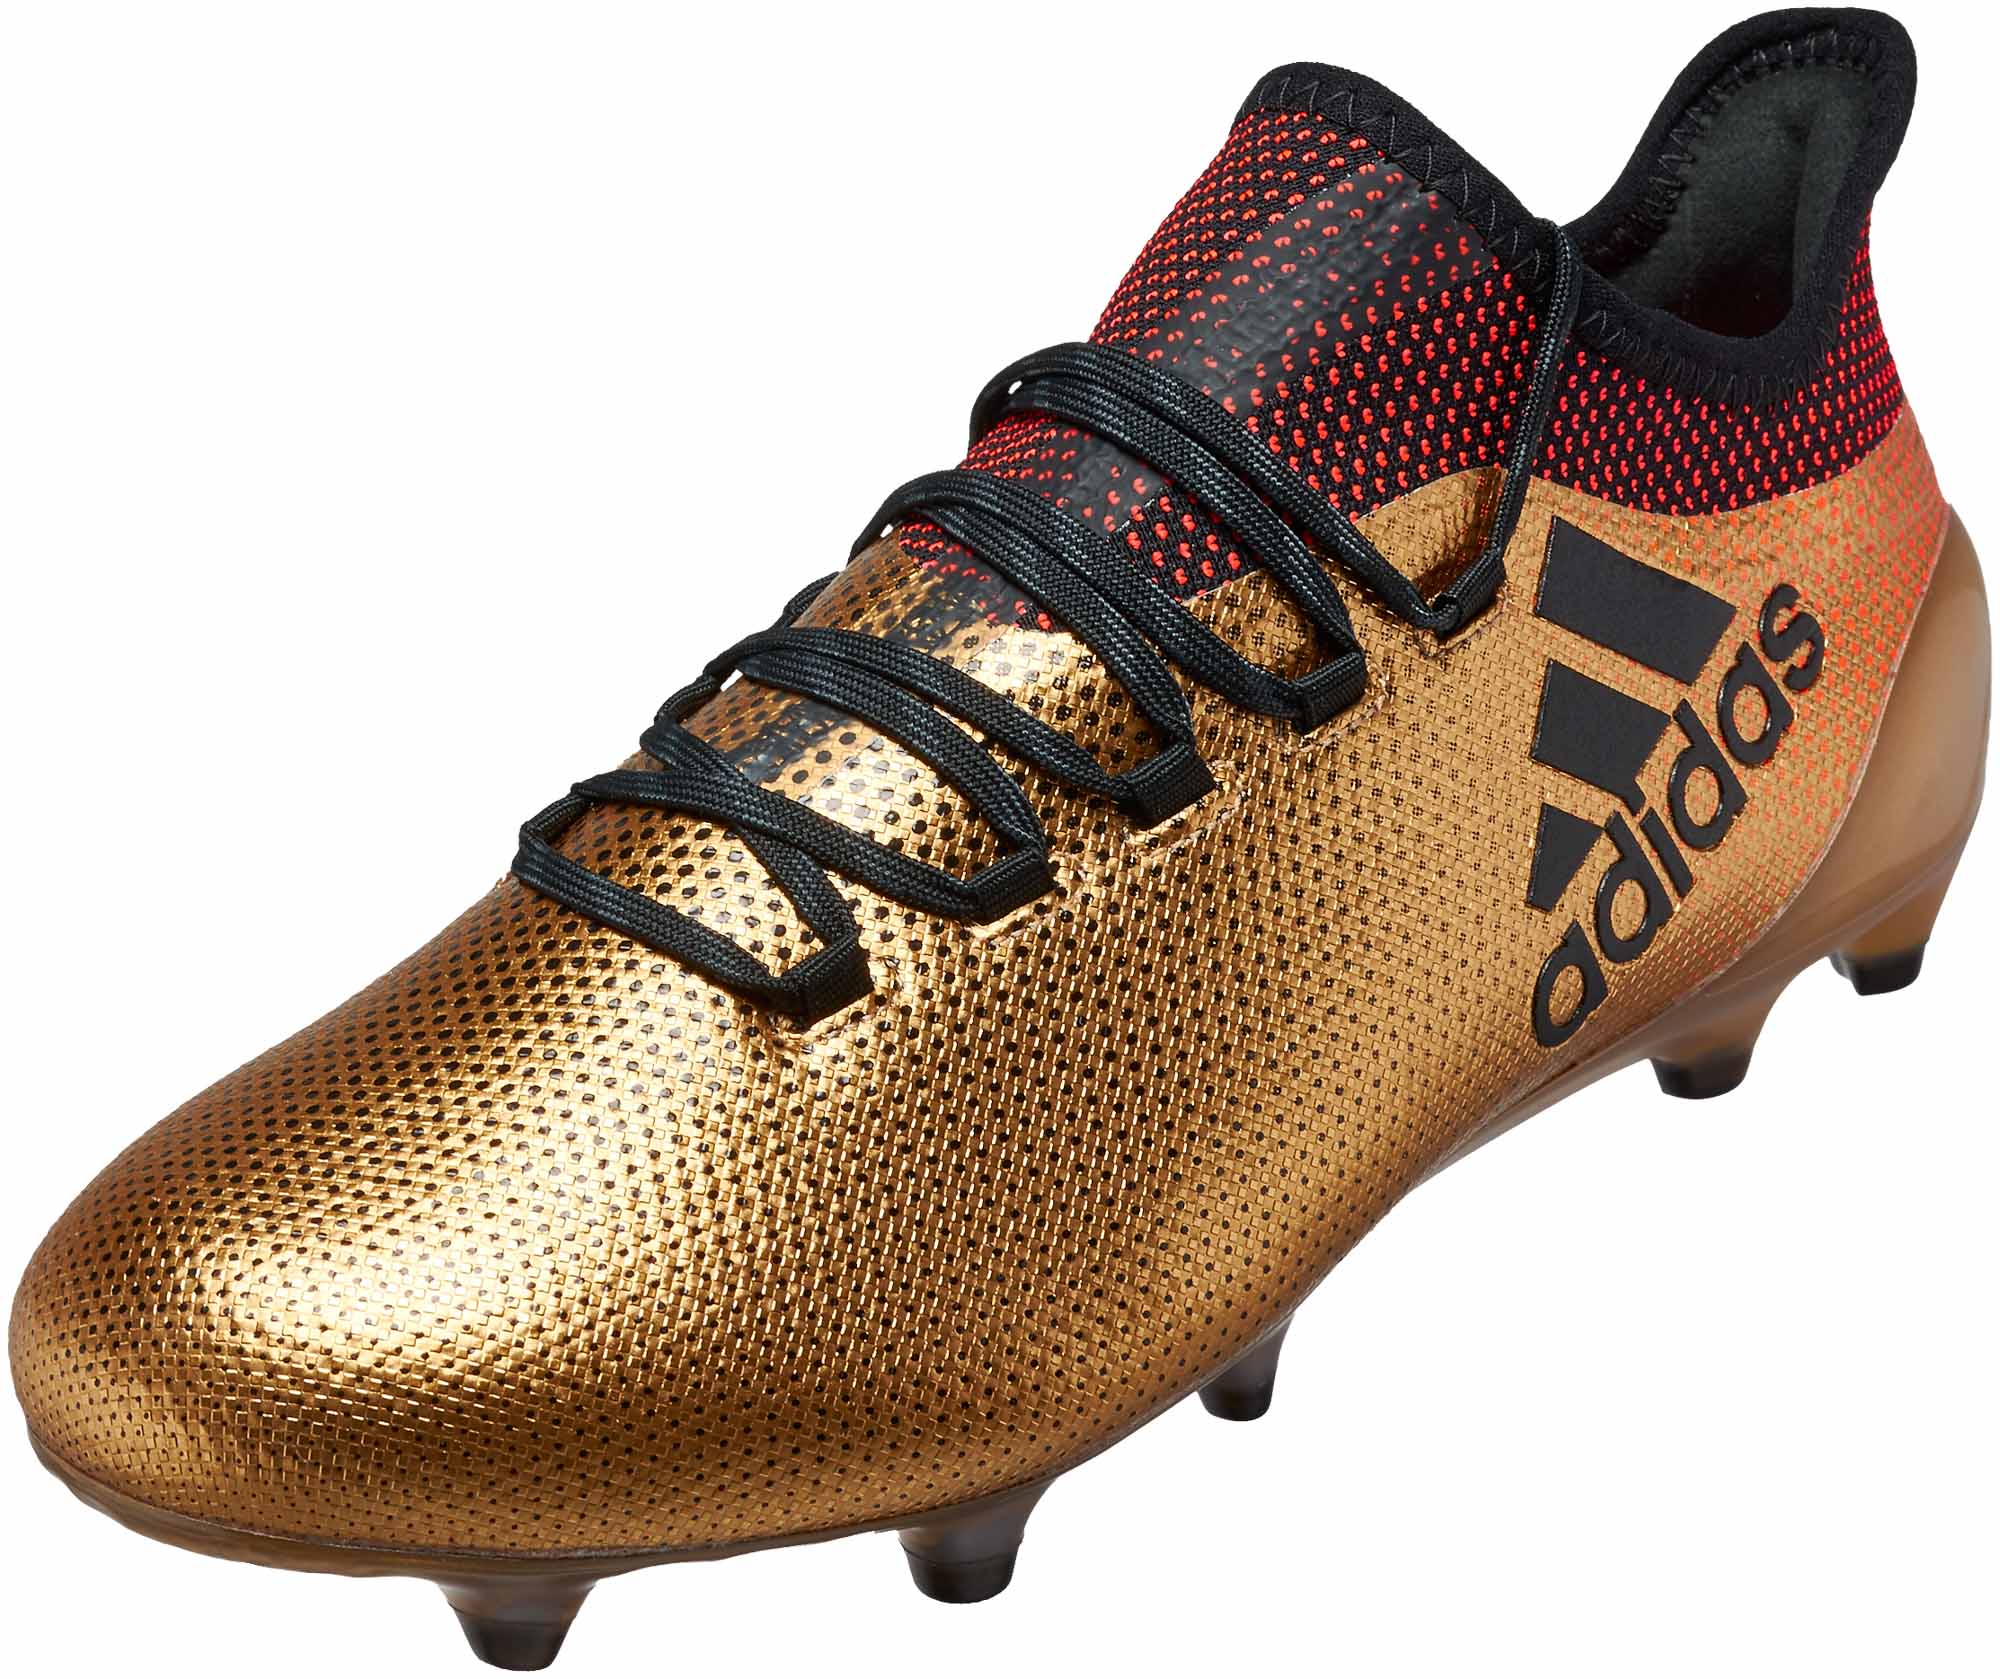 adidas x 17.1 fg leather football boots